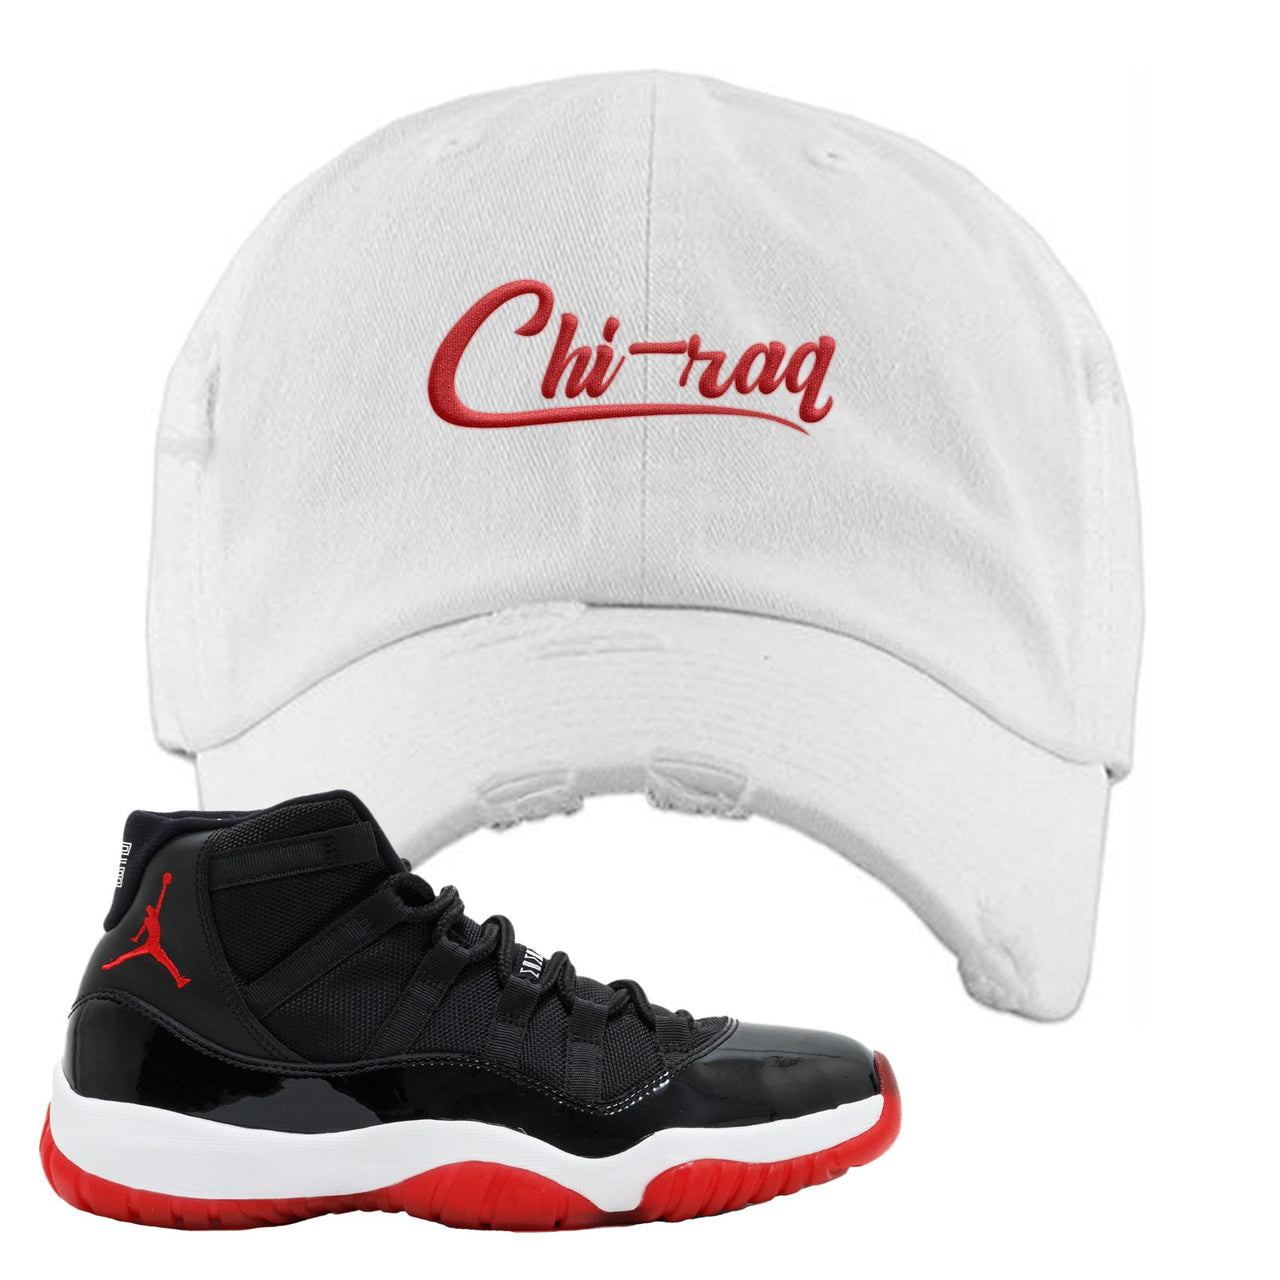 Jordan 11 Bred Chi-raq White Sneaker Hook Up Distressed Dad Hat